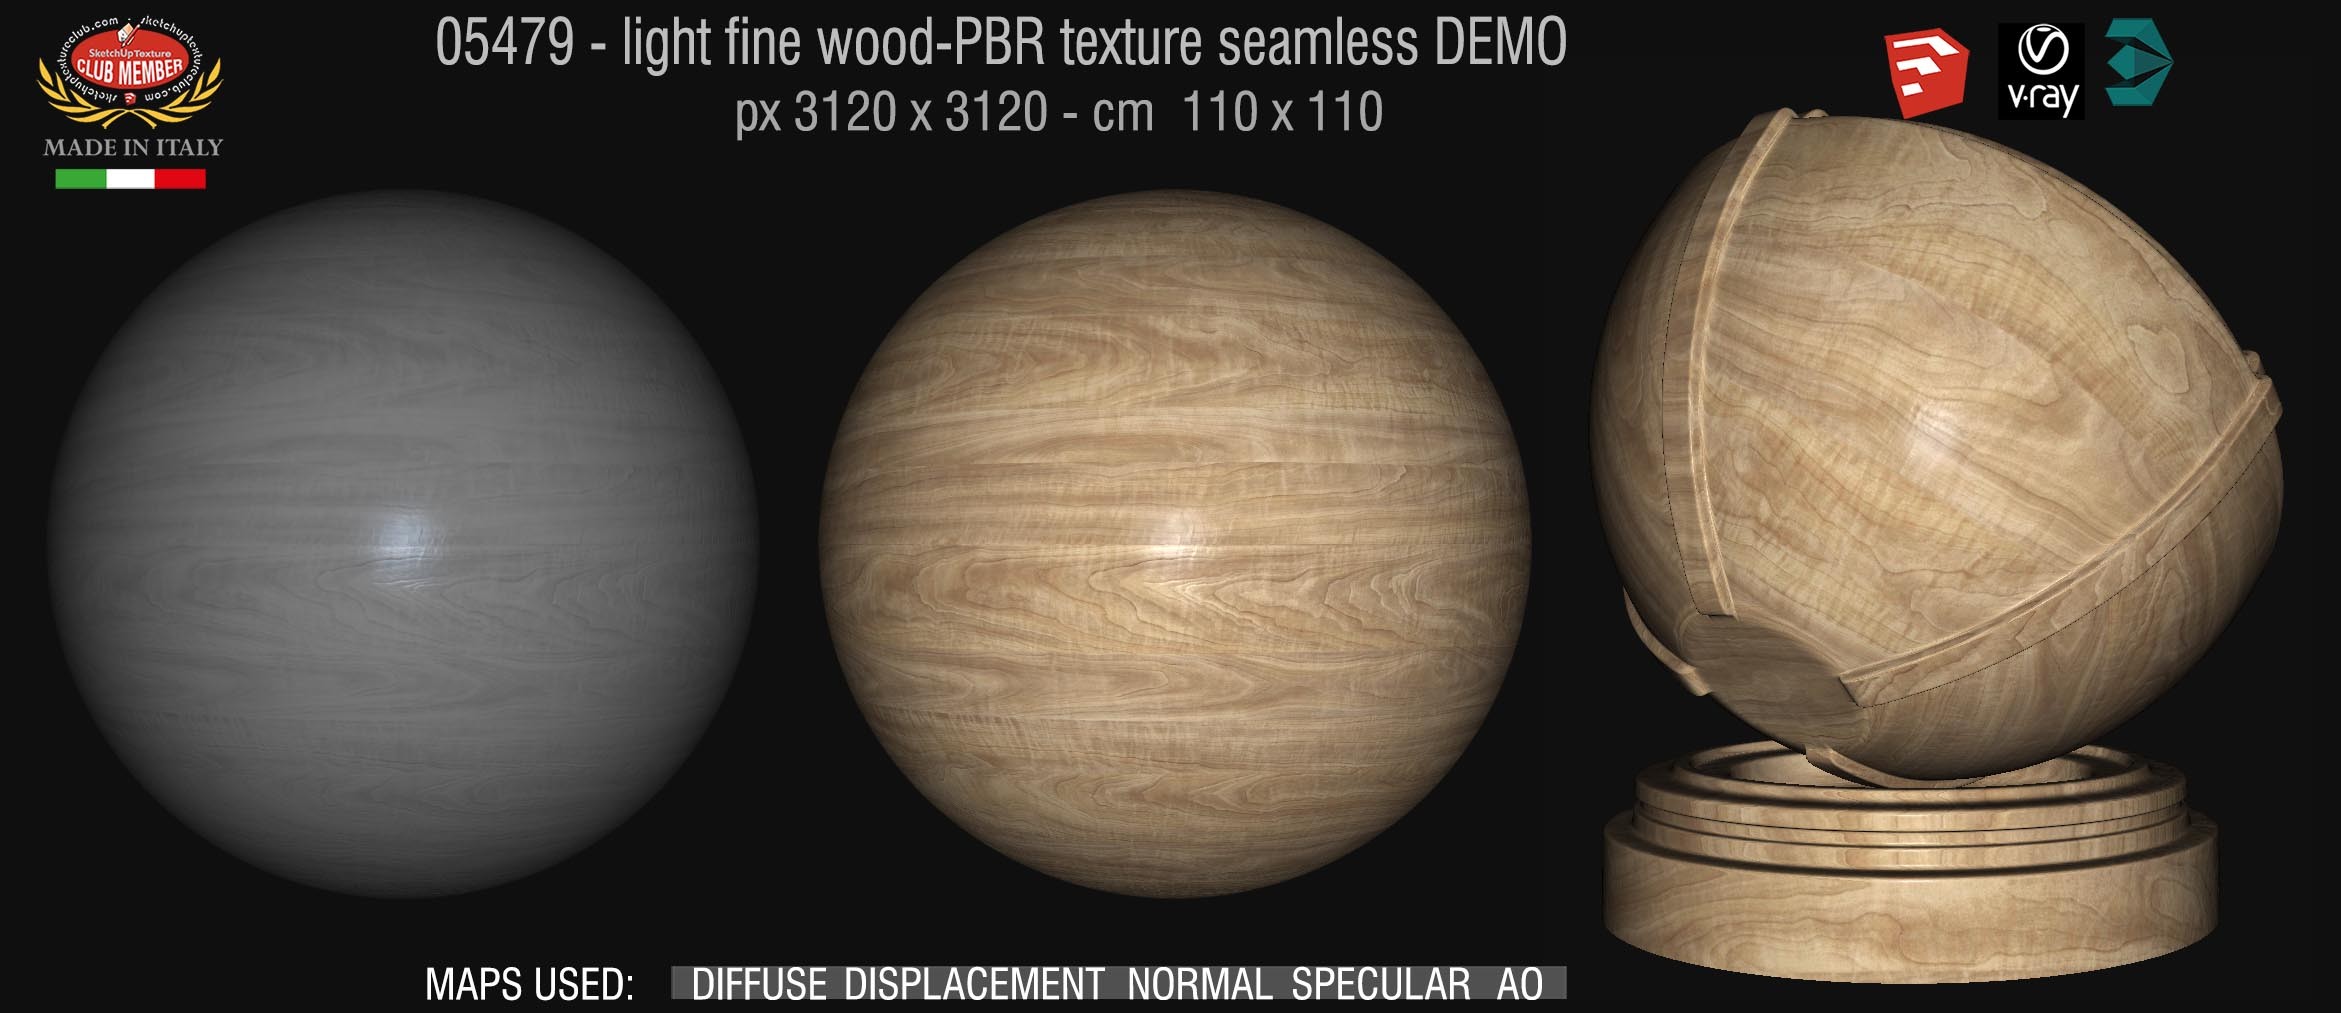 05479 light fine wood-PBR texture seamless DEMO